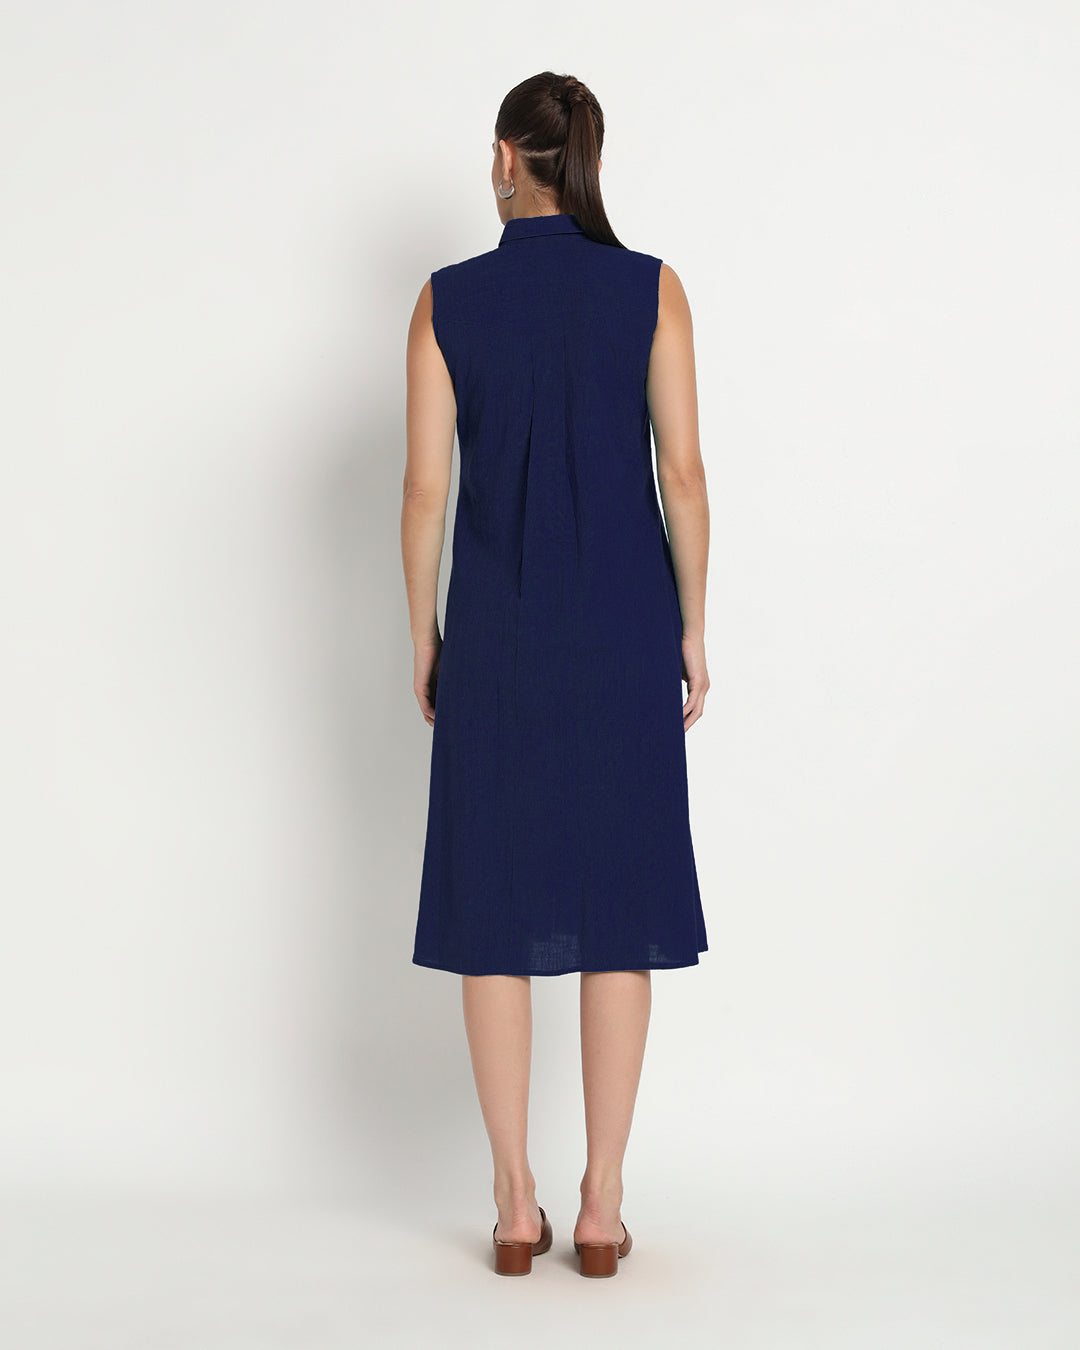 Midnight Blue Artful A-Line Dress